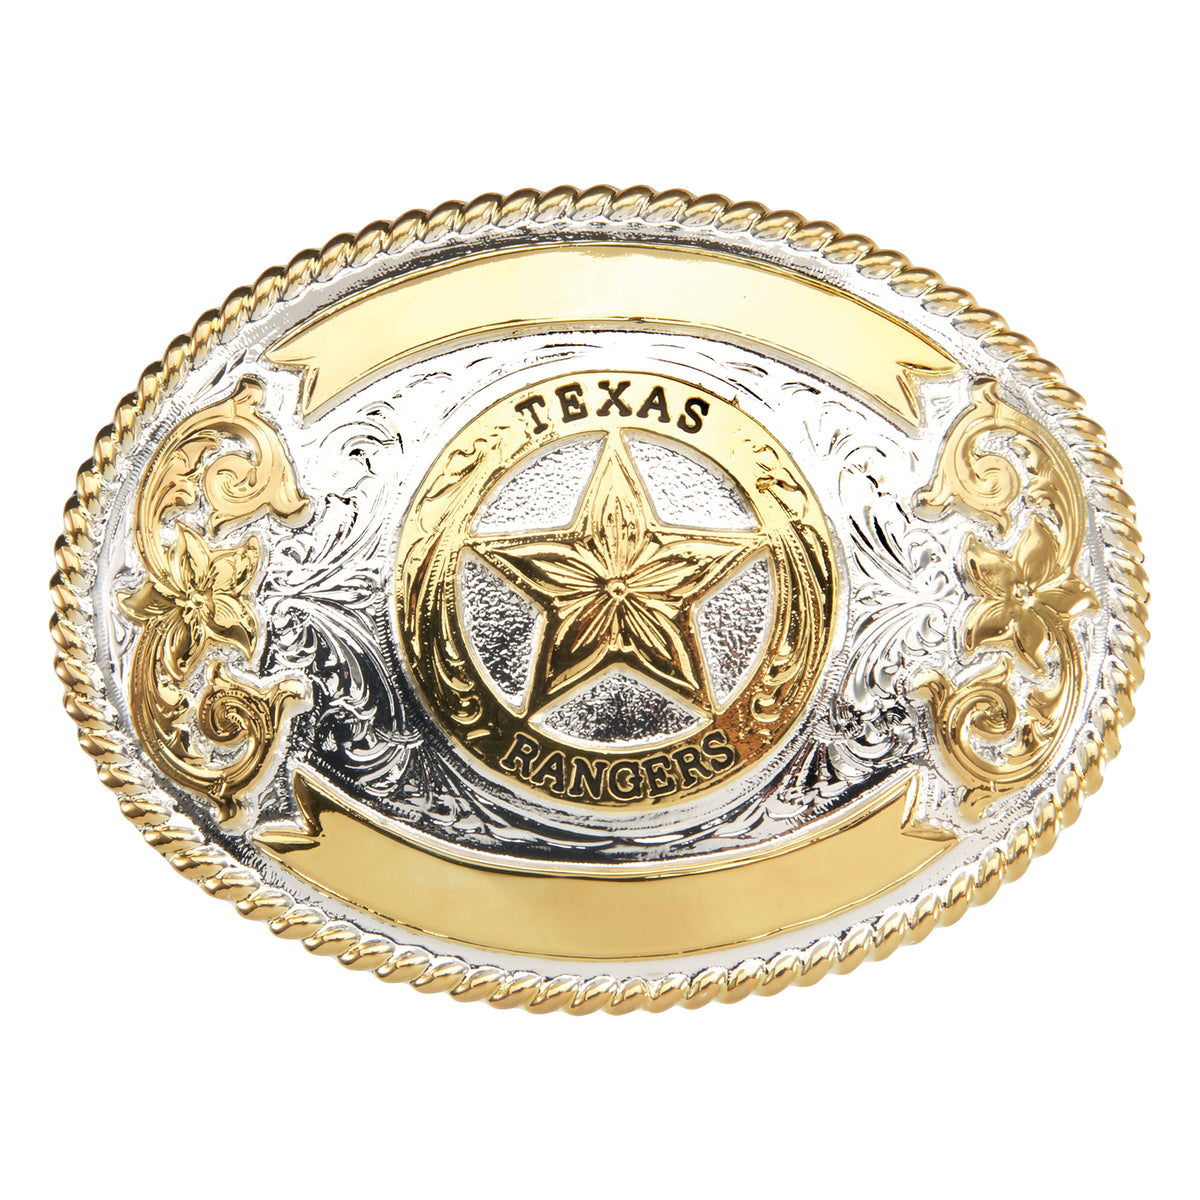 Texas Ranger Buckle